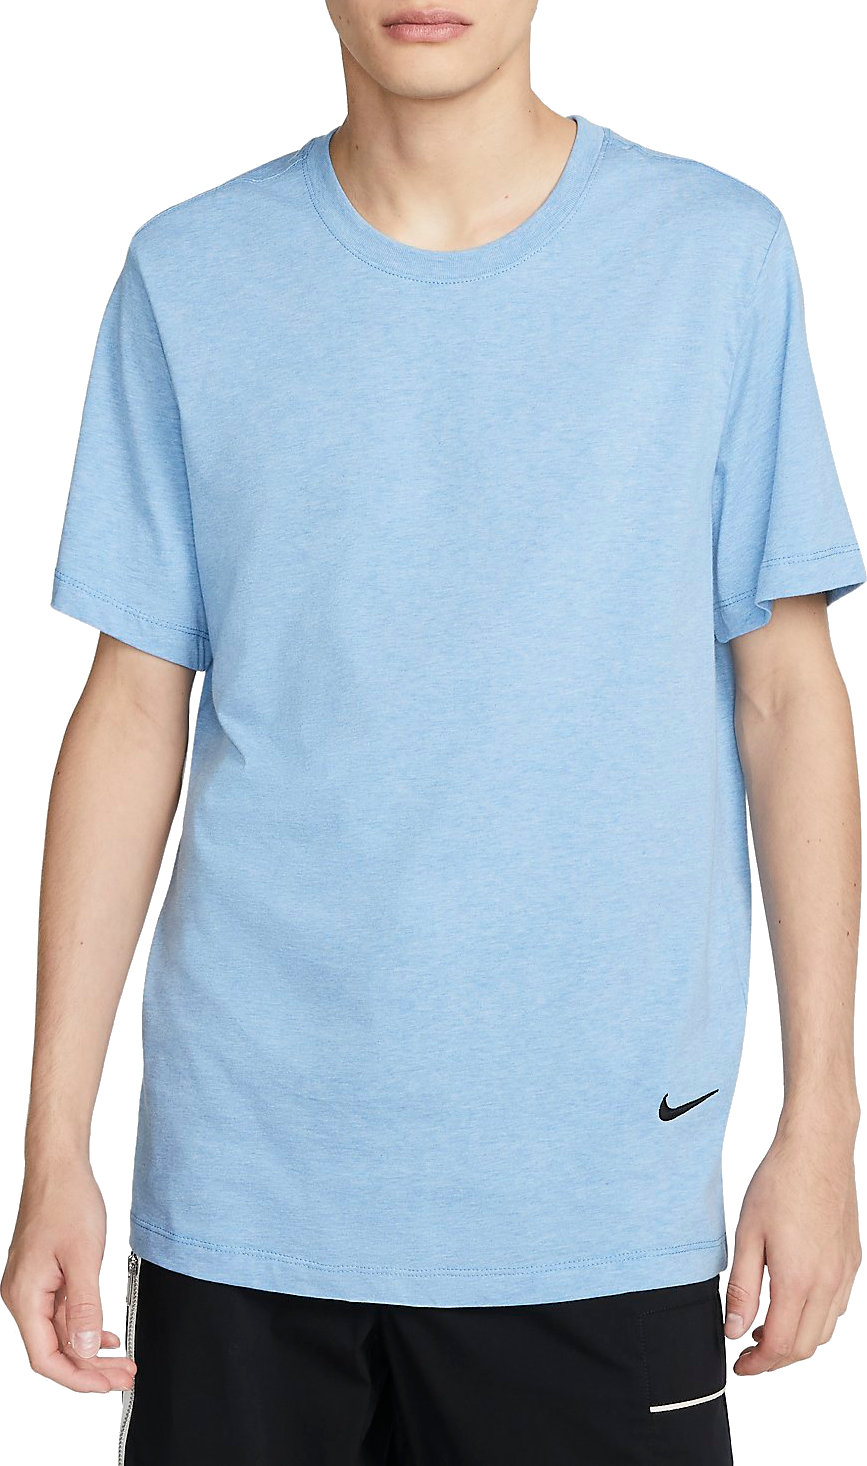 T-shirt Nike Sportswear Tee